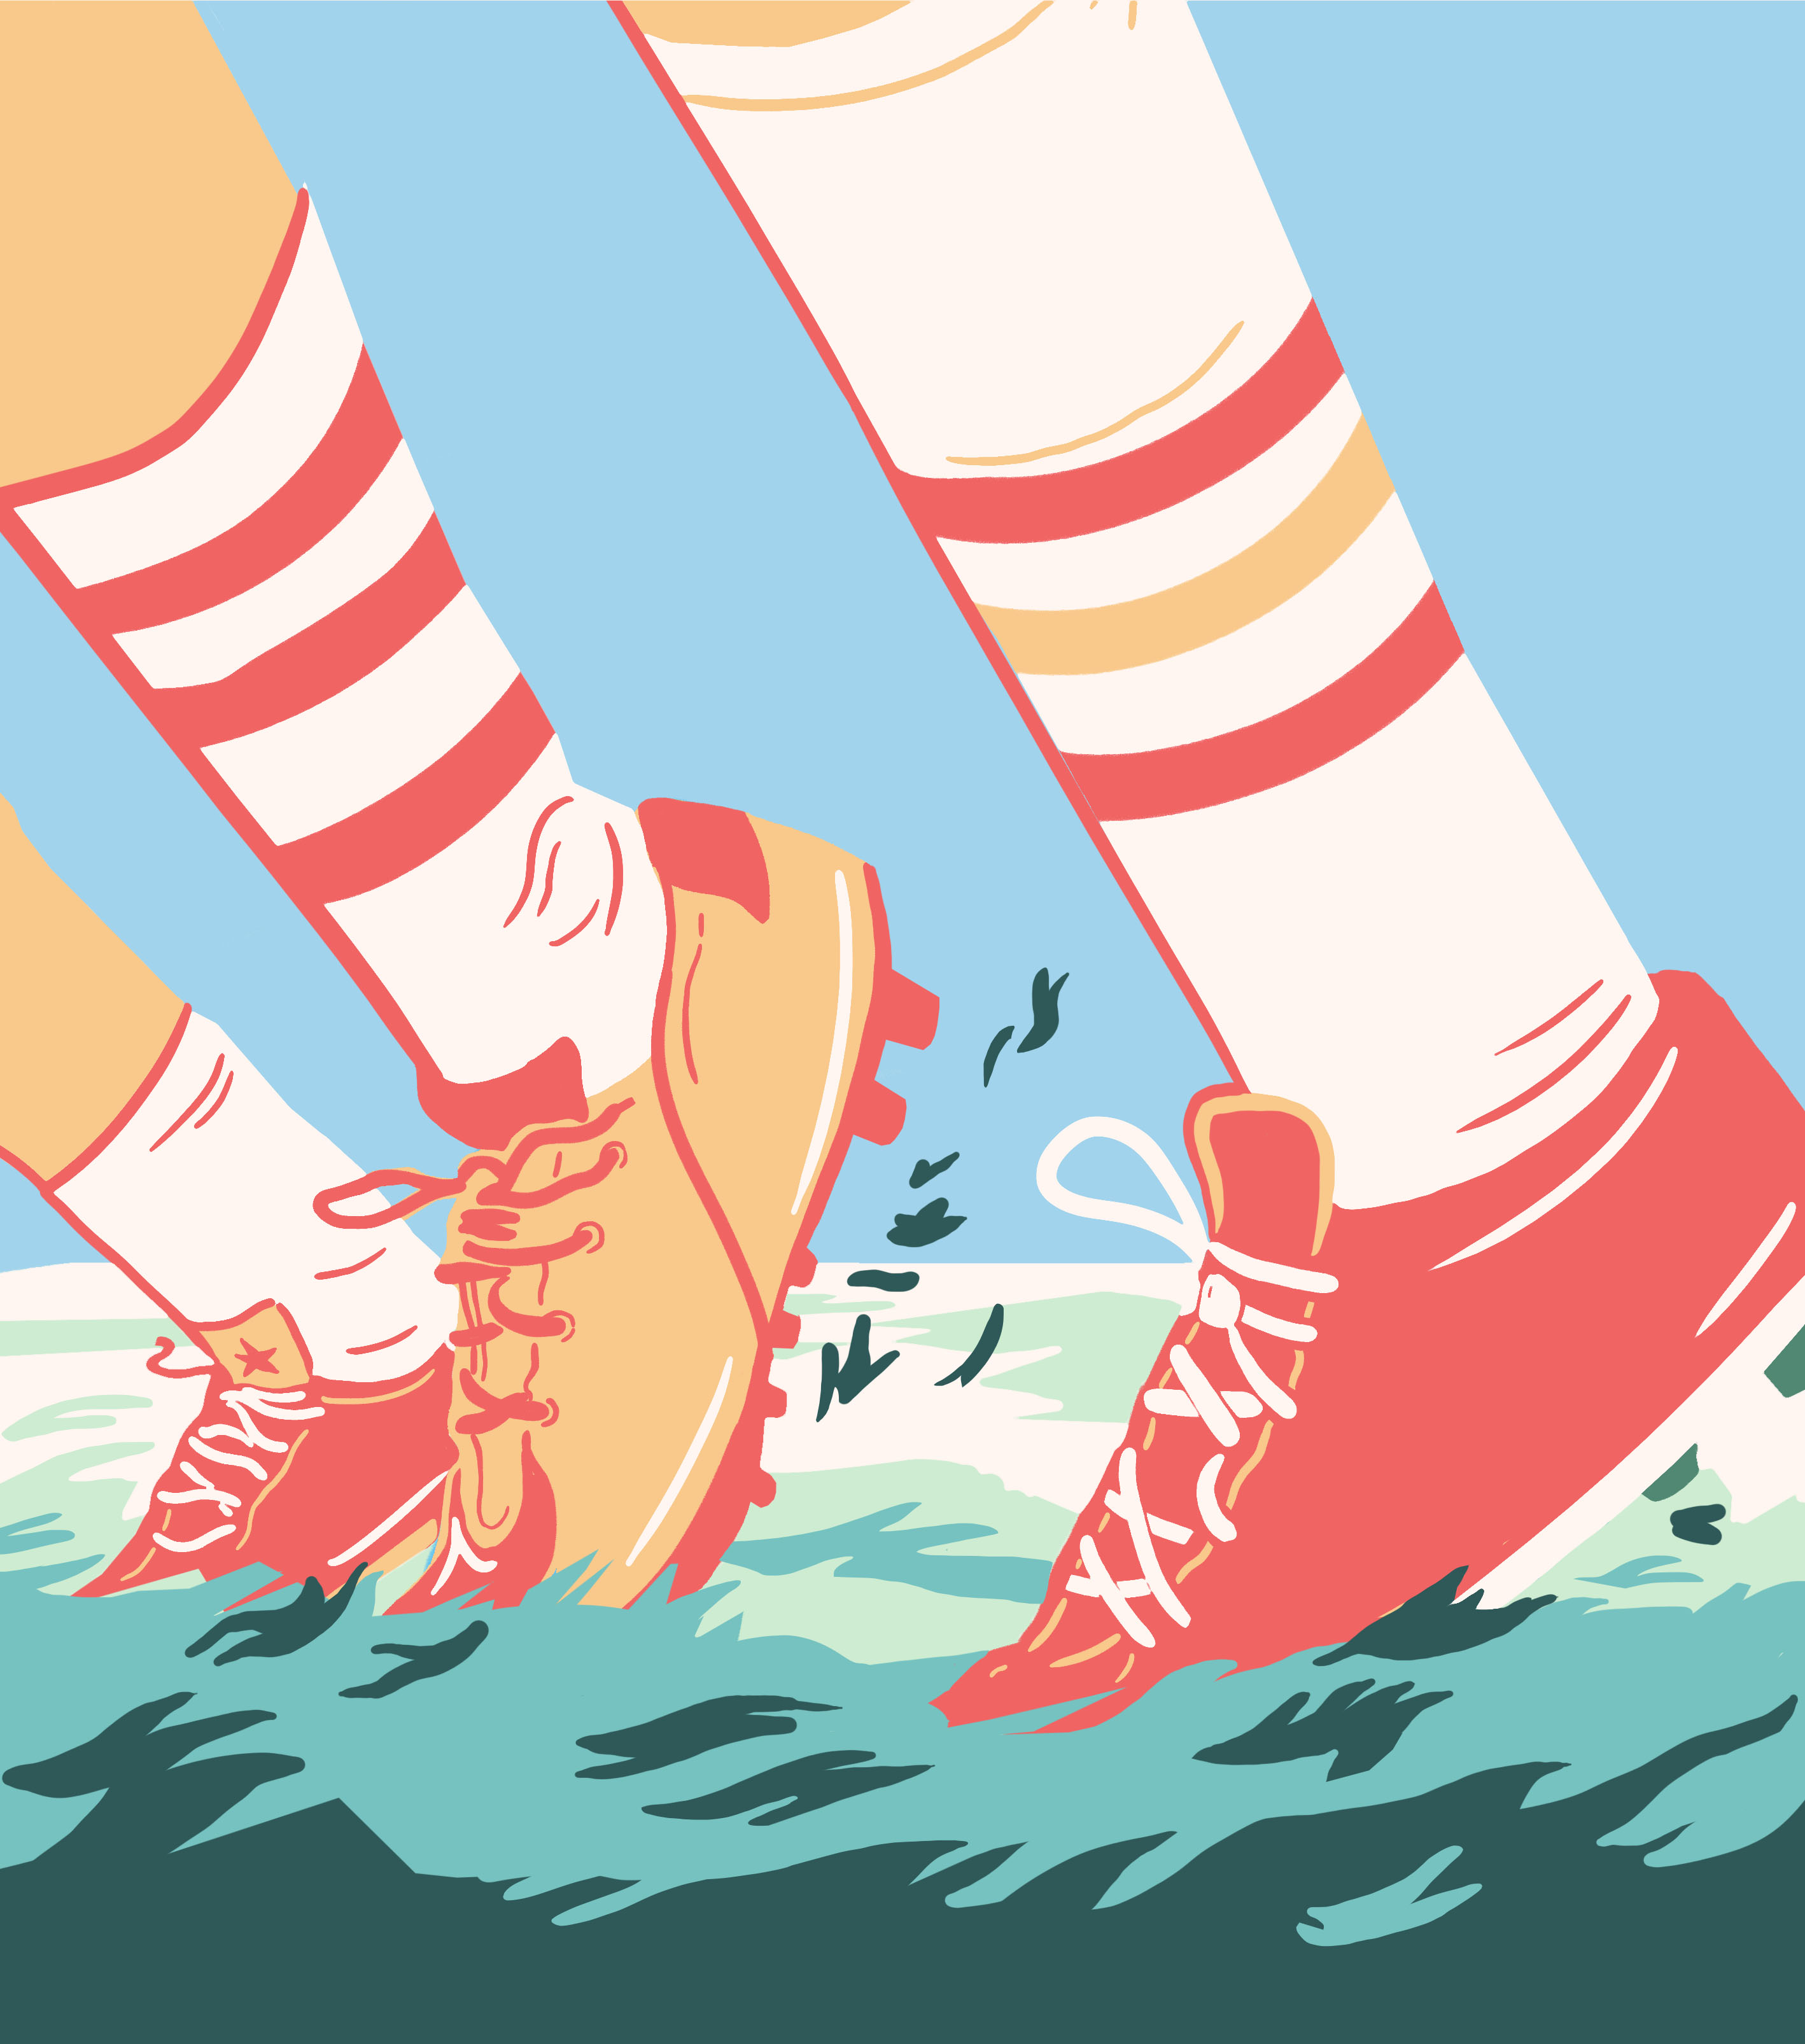 illustration of studded football boots on grass